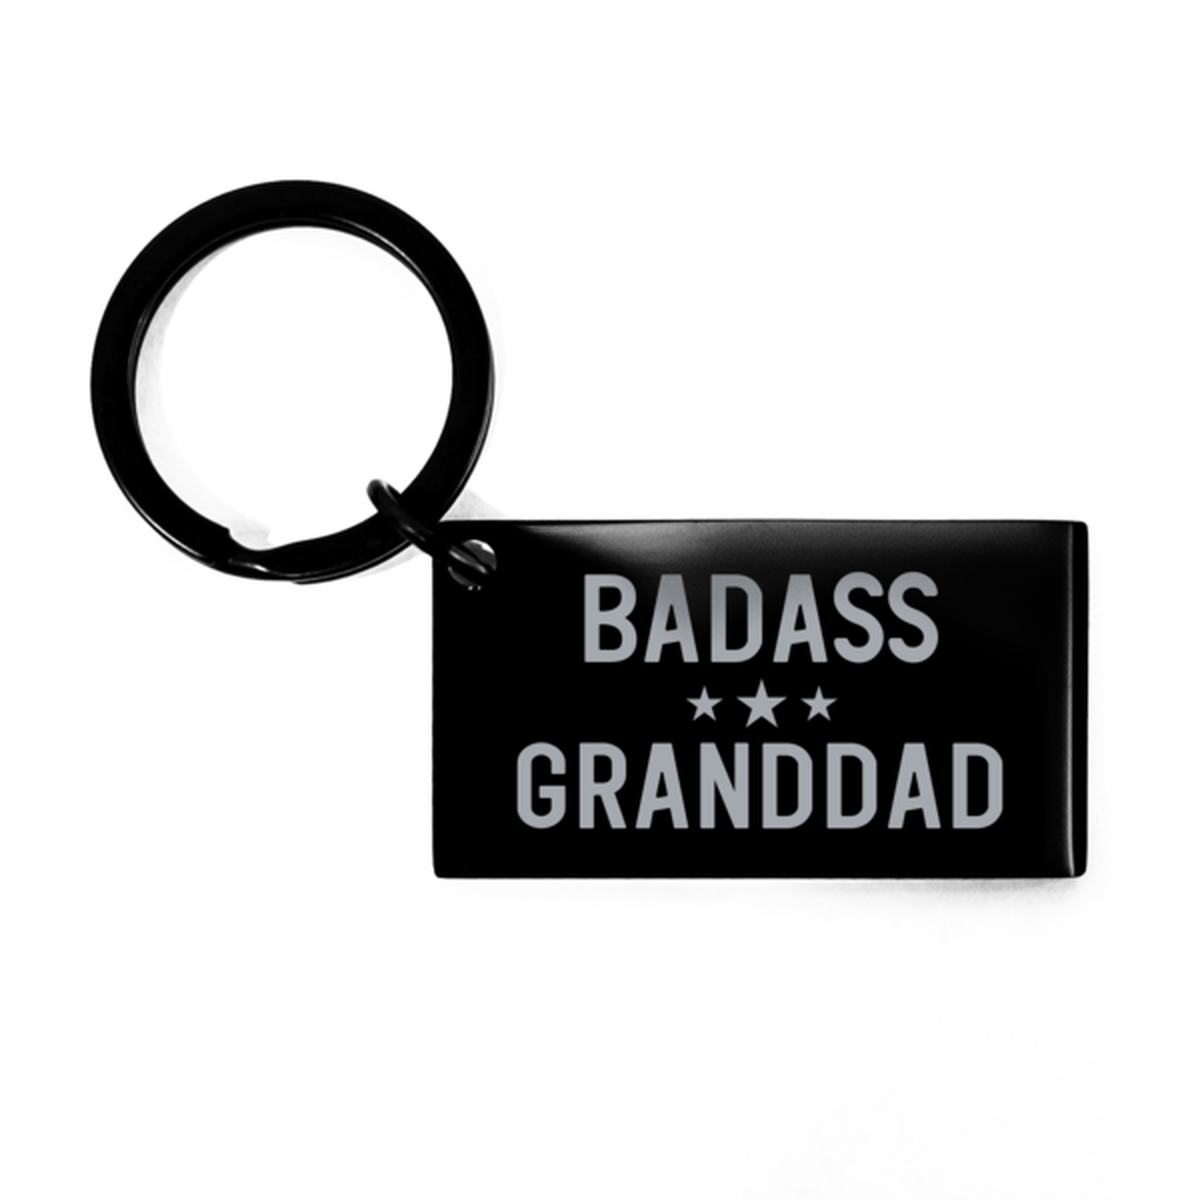 Granddad Black Keychain, Badass Granddad, Funny Family Gifts  Keyring For Granddad From Granddaughter Grandson